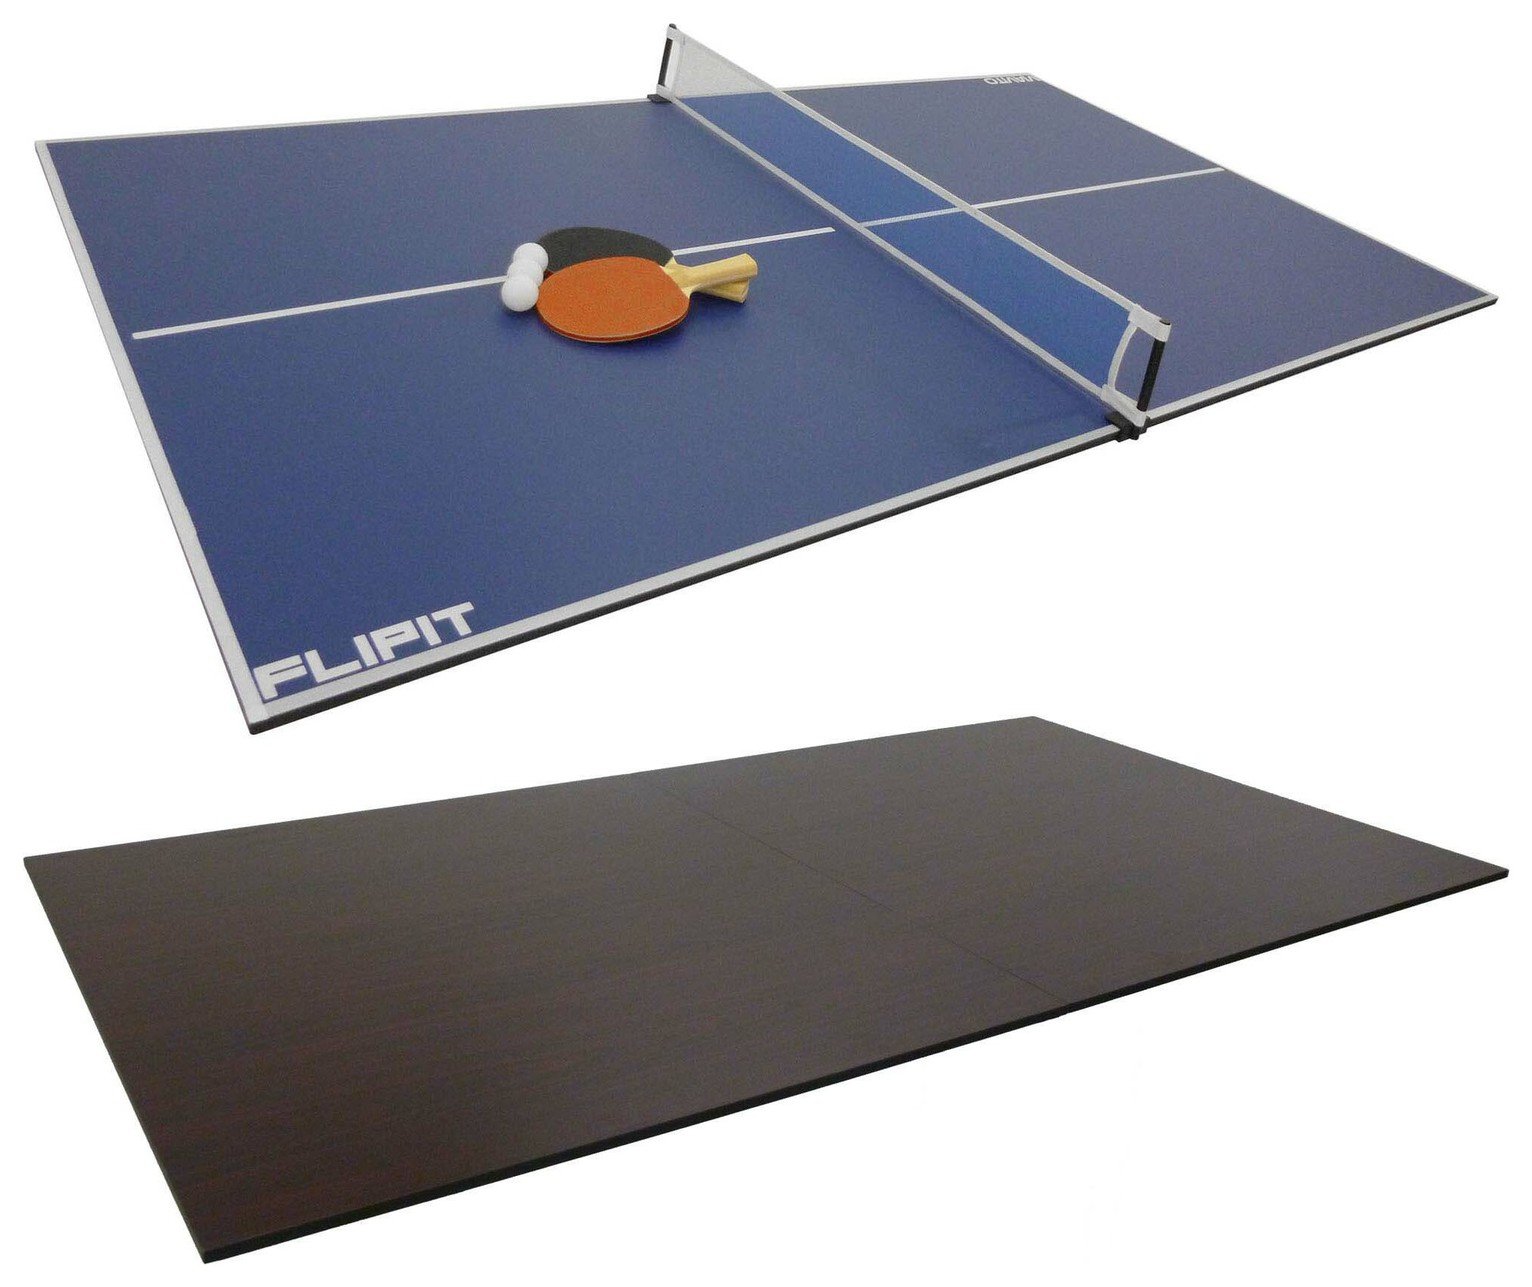 Viavito Flipit 6 ft Table Tennis Top